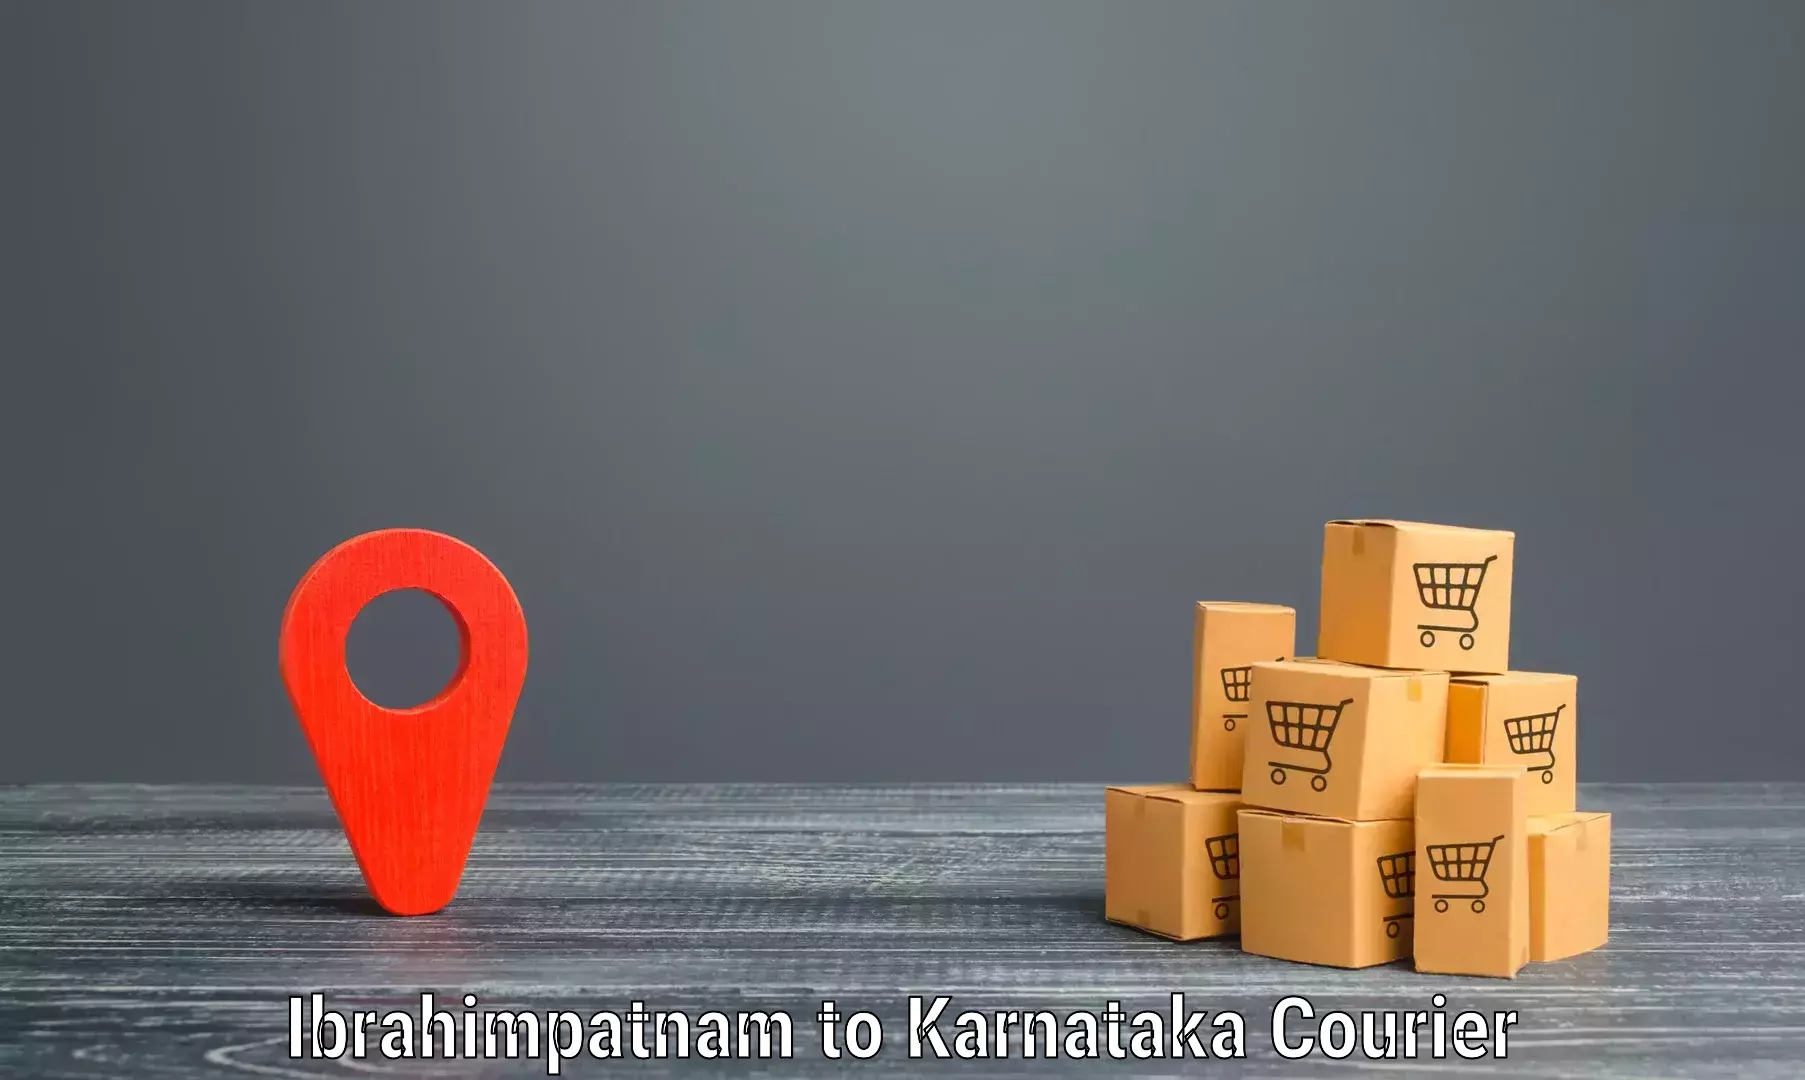 Express delivery network Ibrahimpatnam to Kanjarakatte